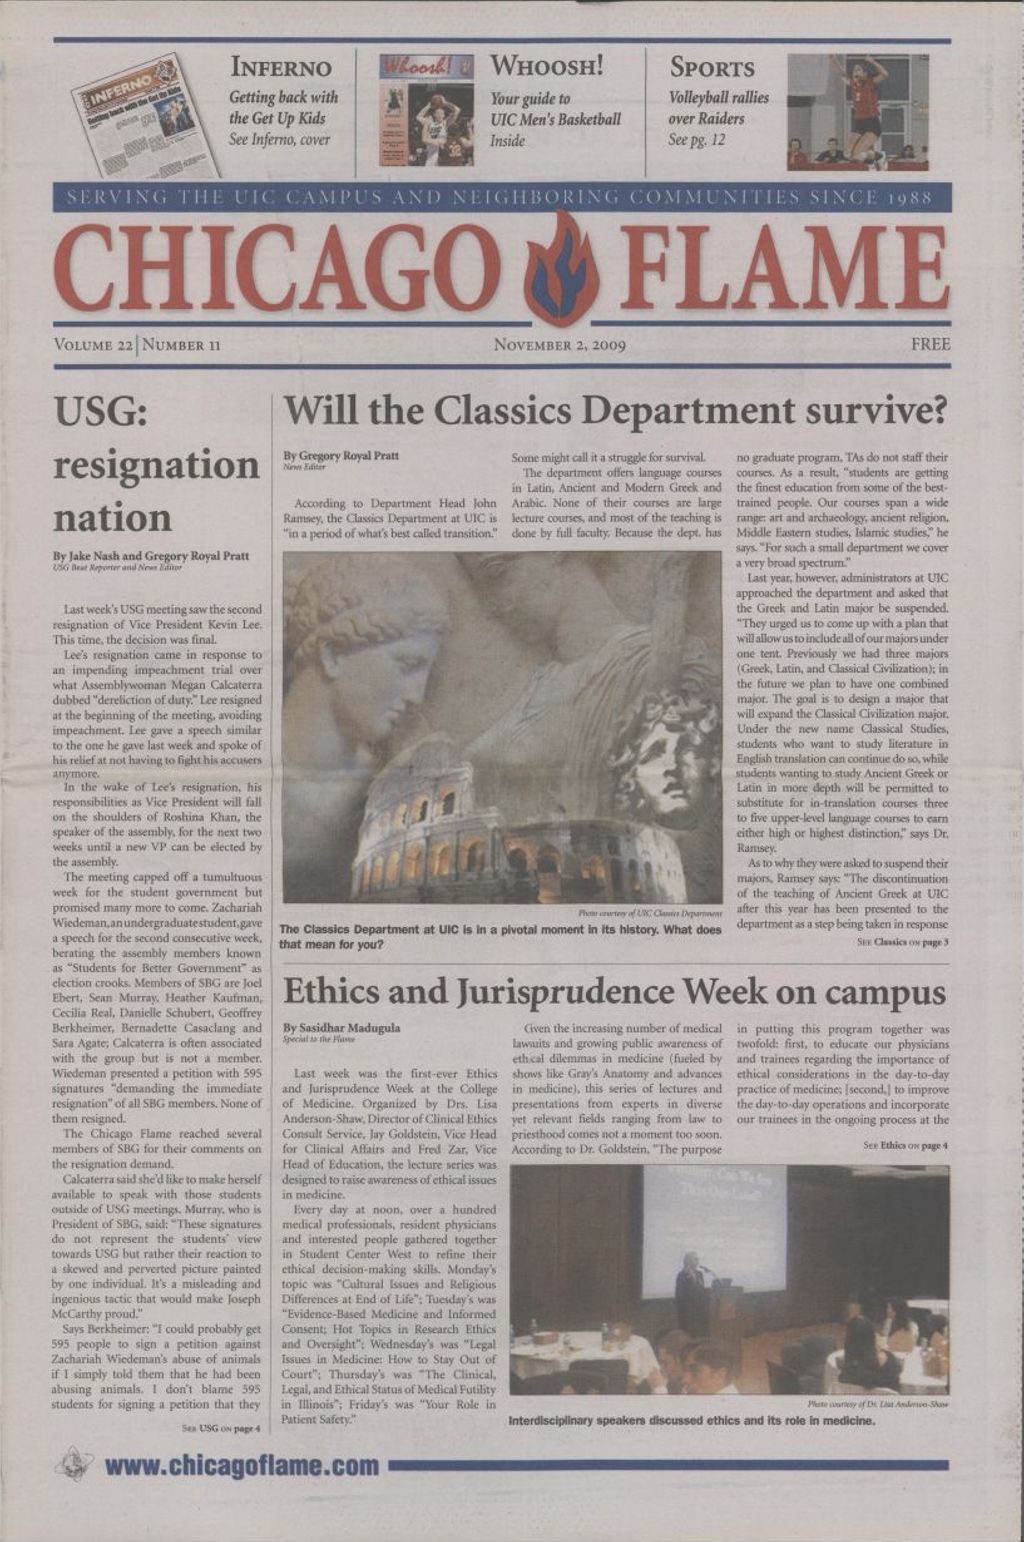 Miniature of Chicago Flame (November 2, 2009)